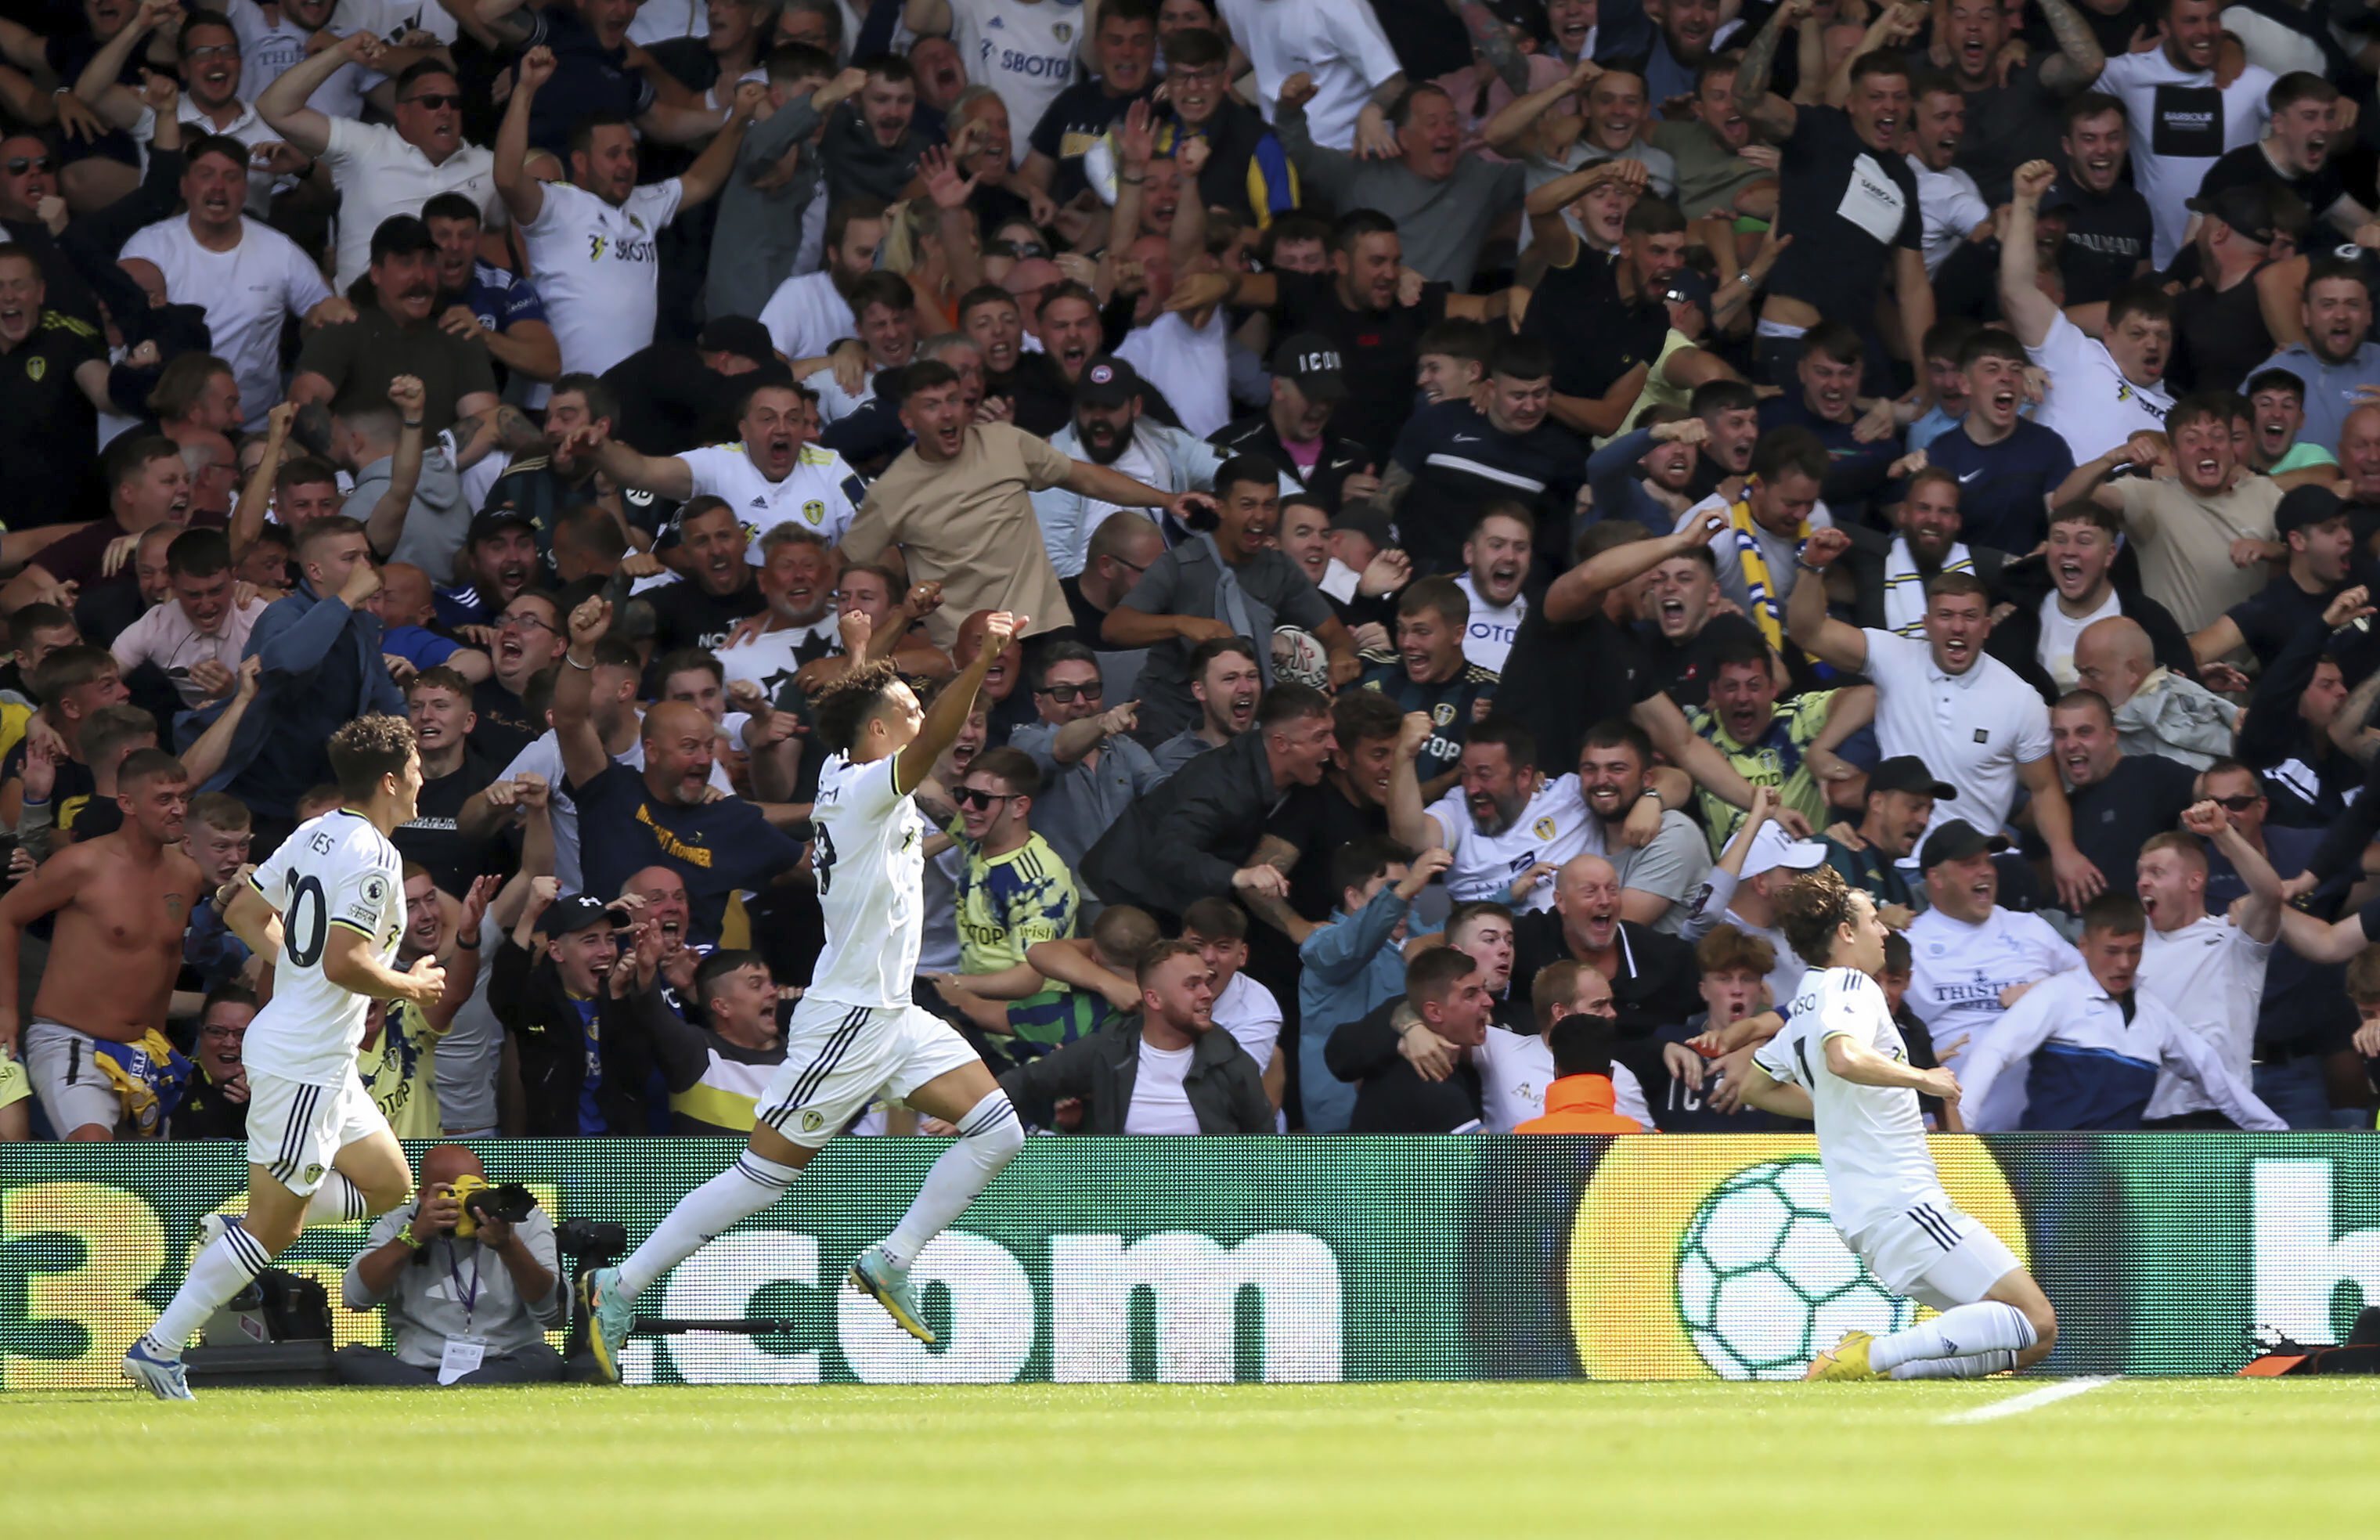 Brenden Aaronsons first Leeds United goal in Premier League is big news in Philadelphia image